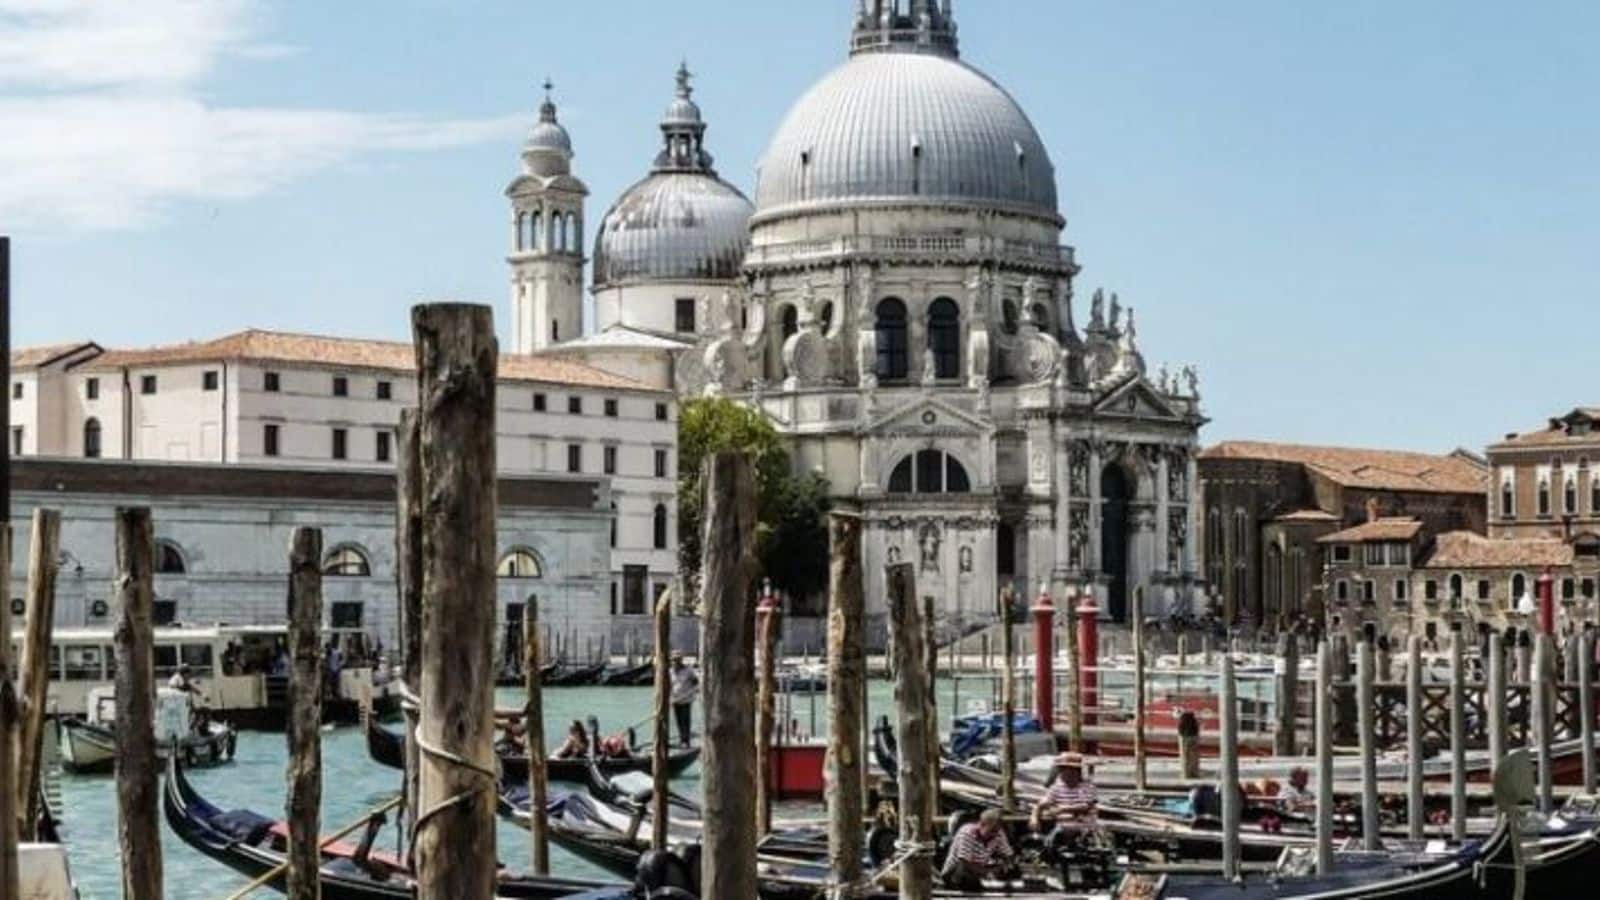 Explore Venice's off-peak carnival wonders